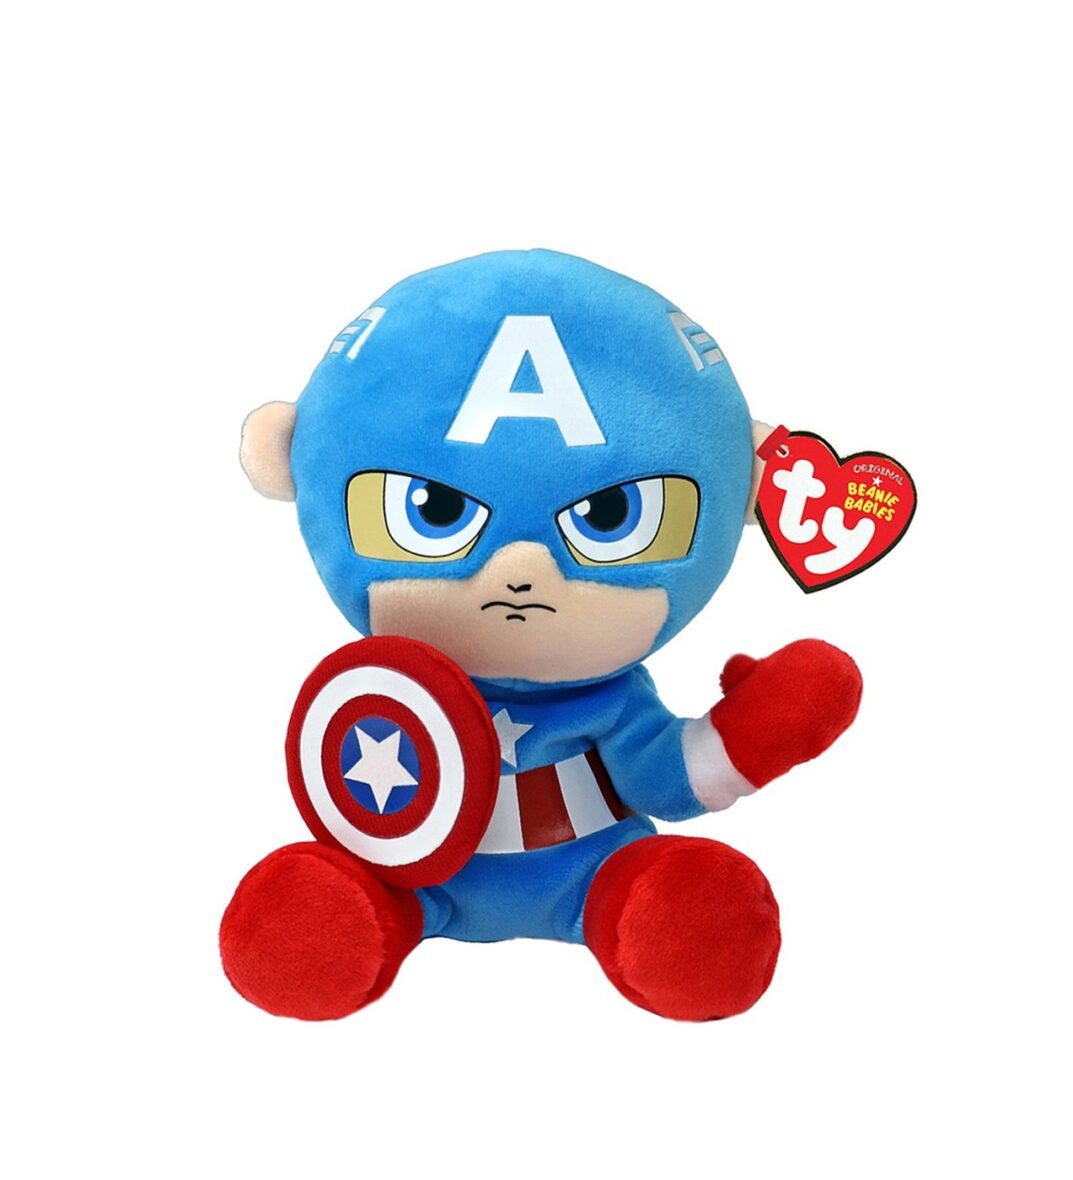 Plus Ty 15cm Beanie Babies Soft Marvel Captain America